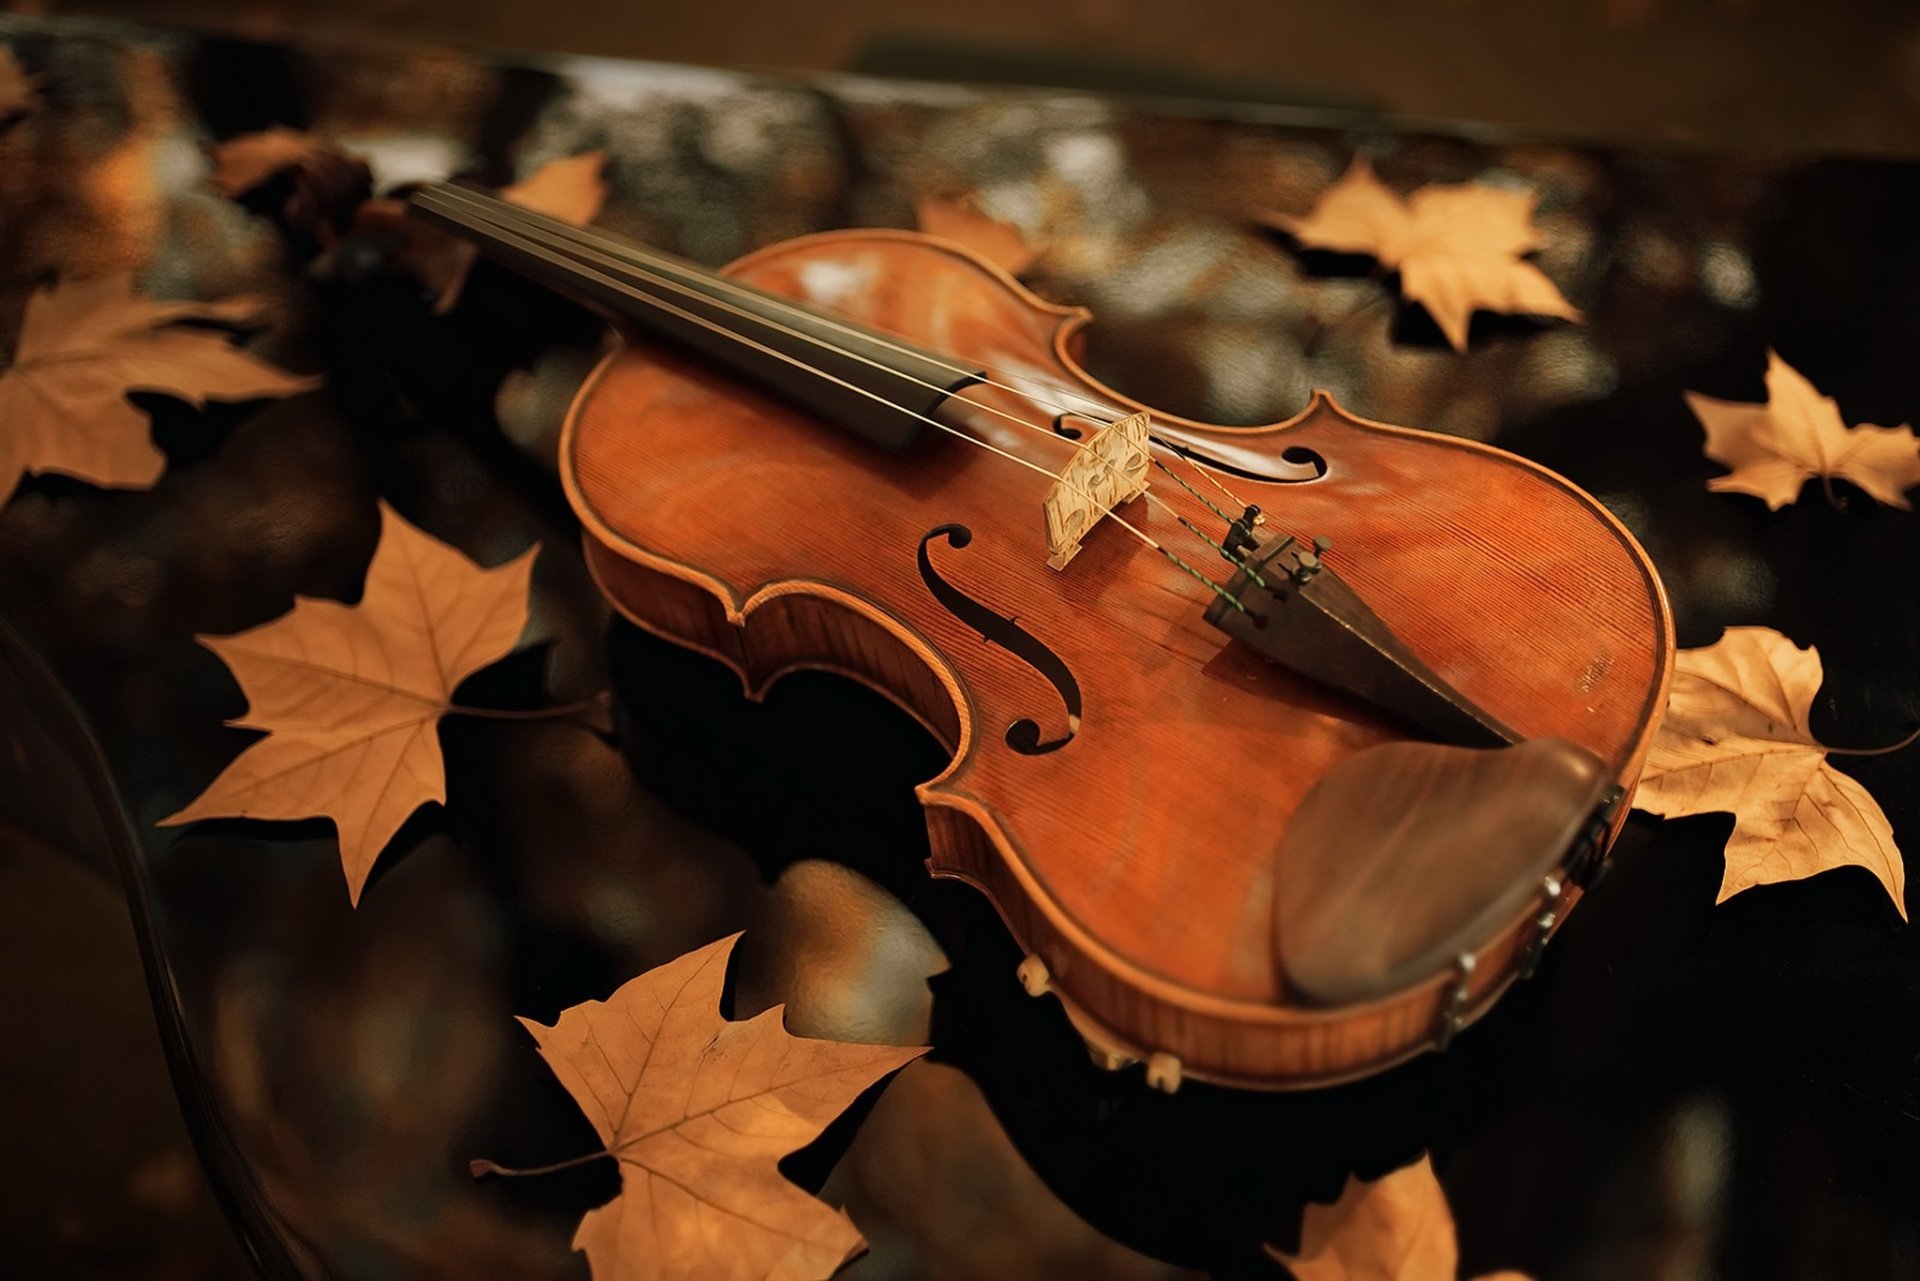 Music Violin HD Wallpaper